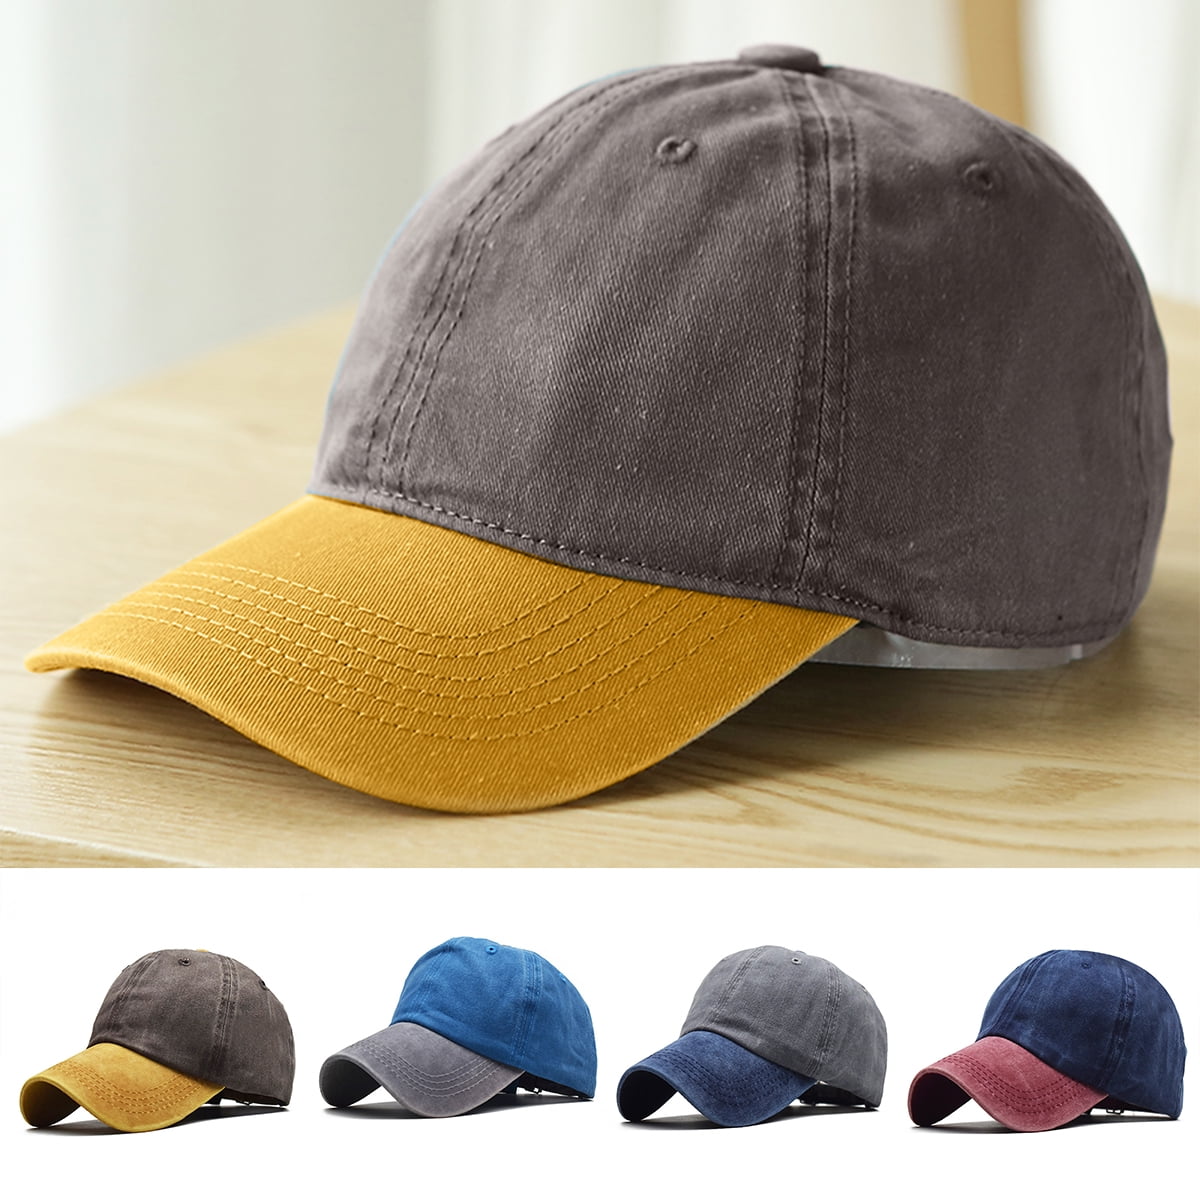 Classic Vintage Baseball Cap Washed Cotton Denim Adjustable Low Profile Dad Hat for Men&Women